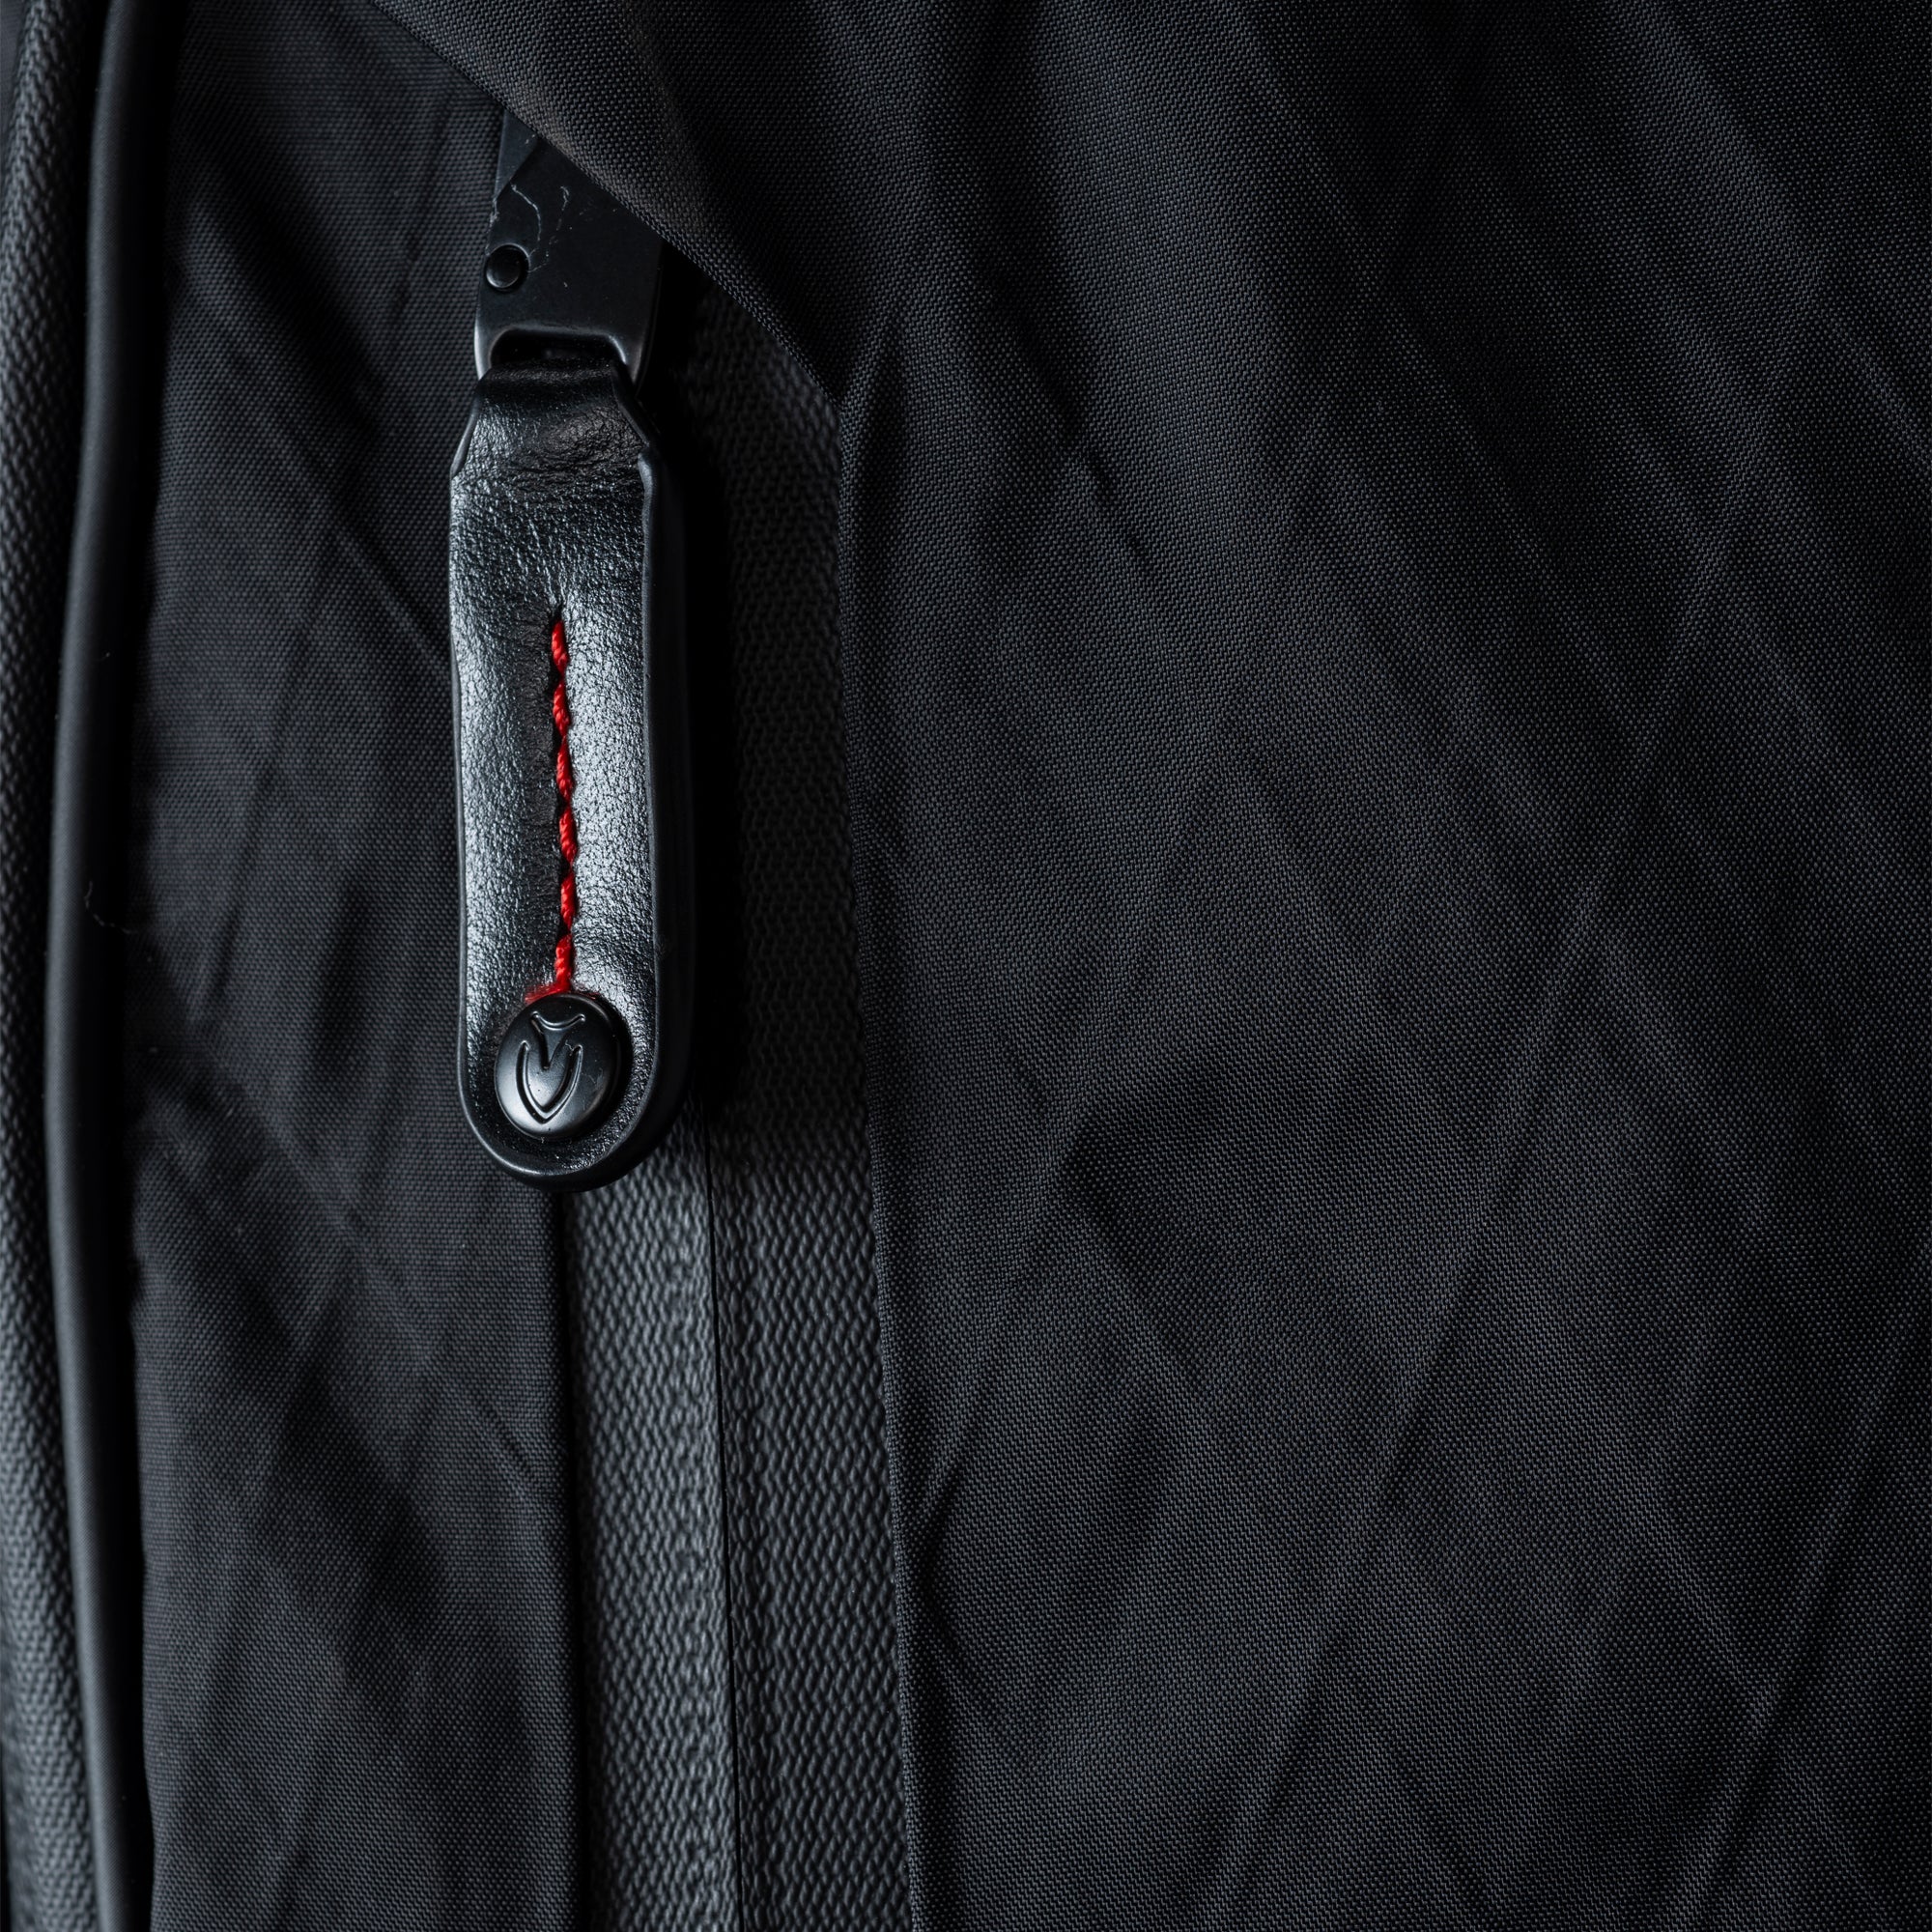 Close up of golf bag DXR material and zipper